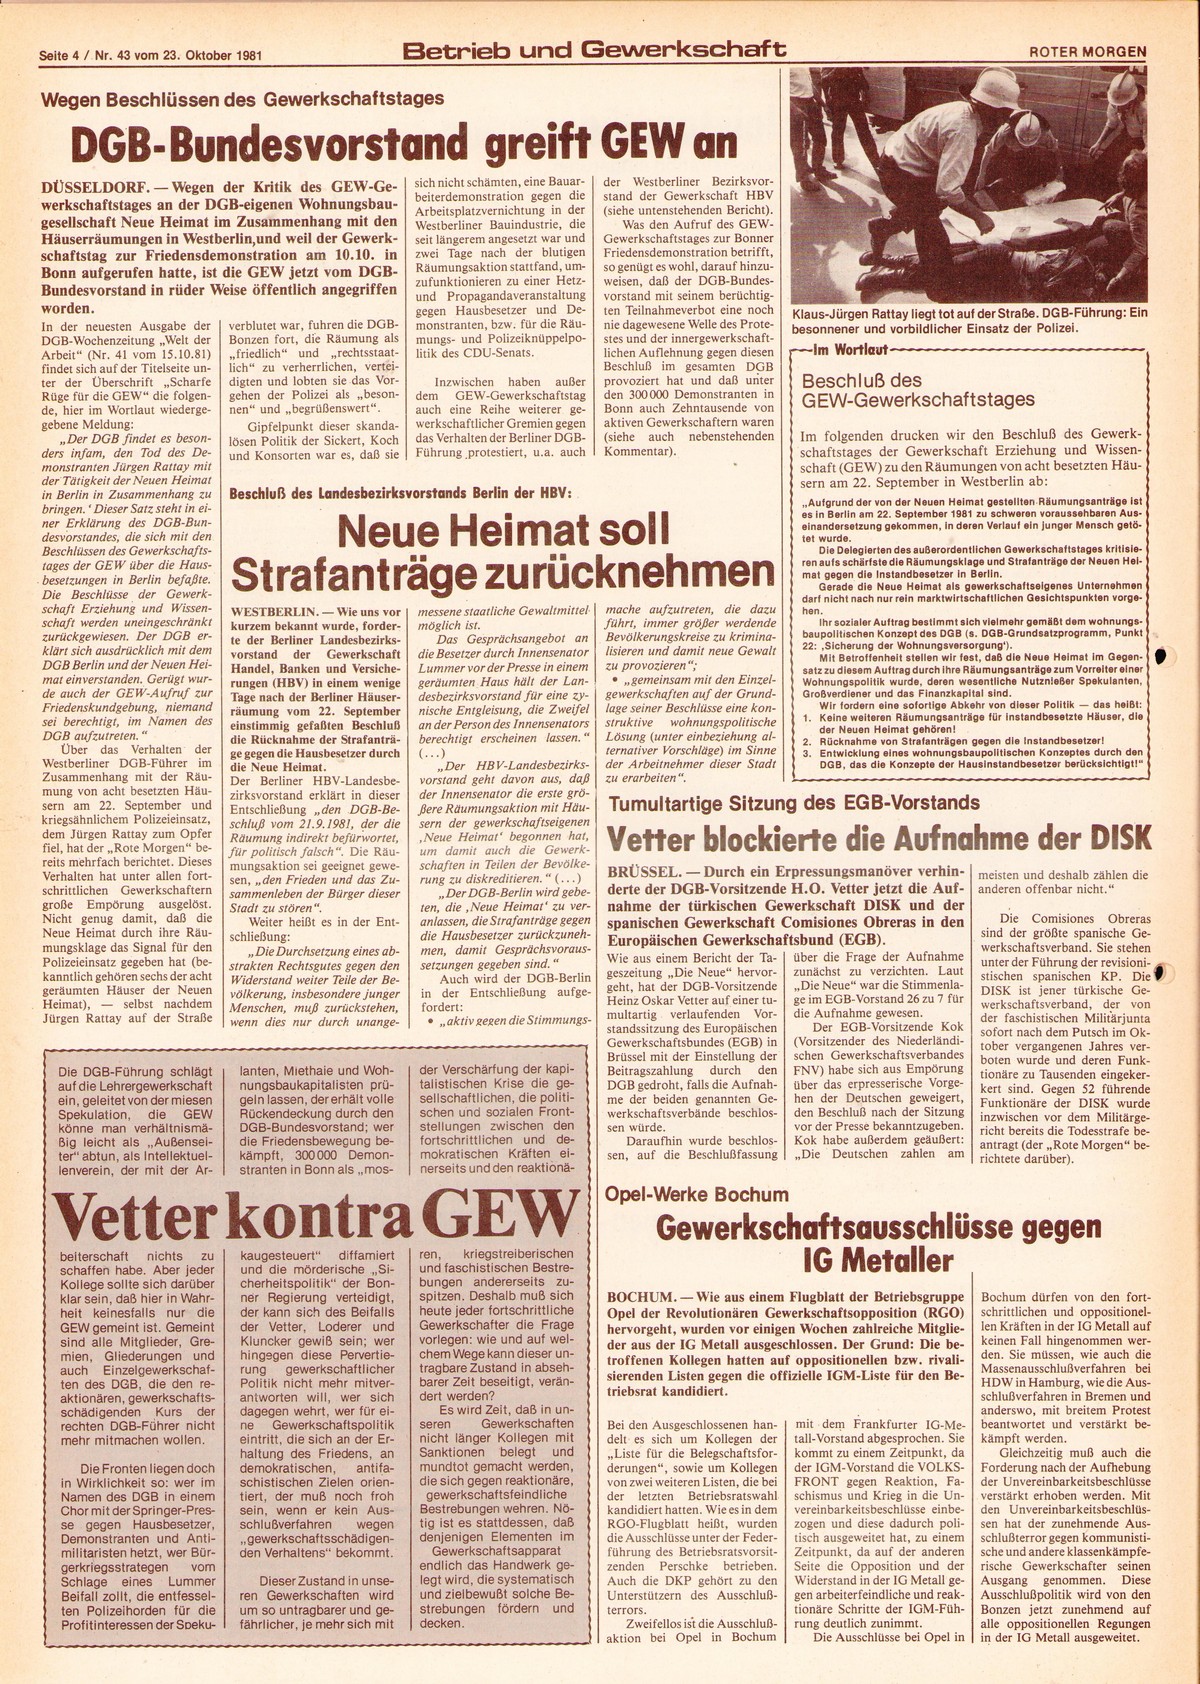 Roter Morgen, 15. Jg., 23. Oktober 1981, Nr. 43, Seite 4